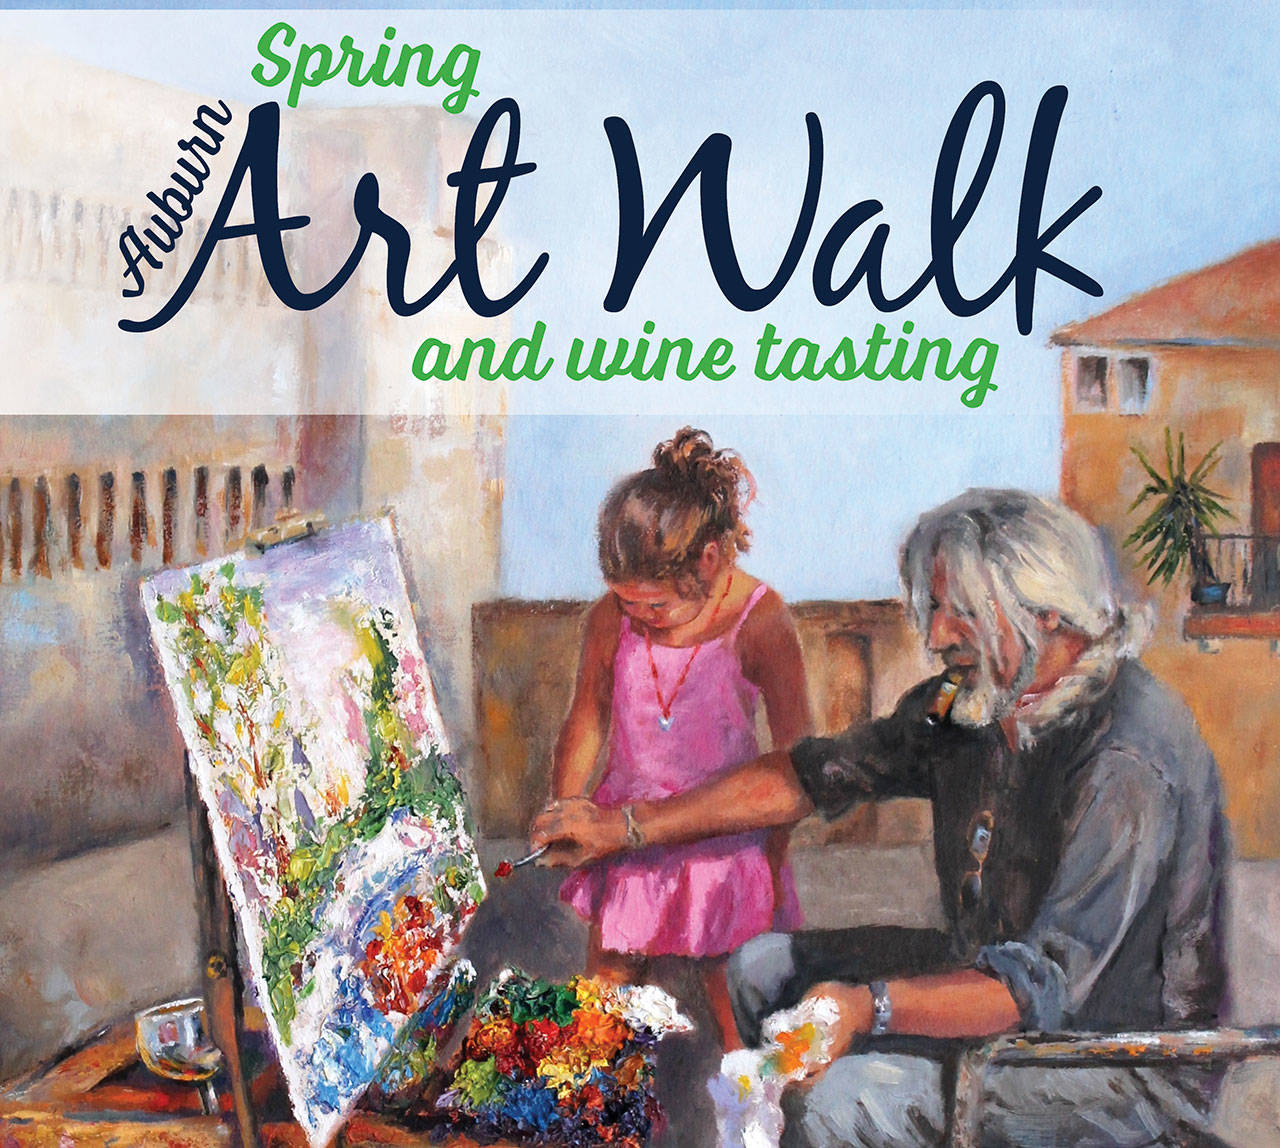 Auburn artist Wendy Ray won the May 12 Auburn Artwalk promotional art award, featuring an artist in Italy teaching a child the joy of painting. COURTESY